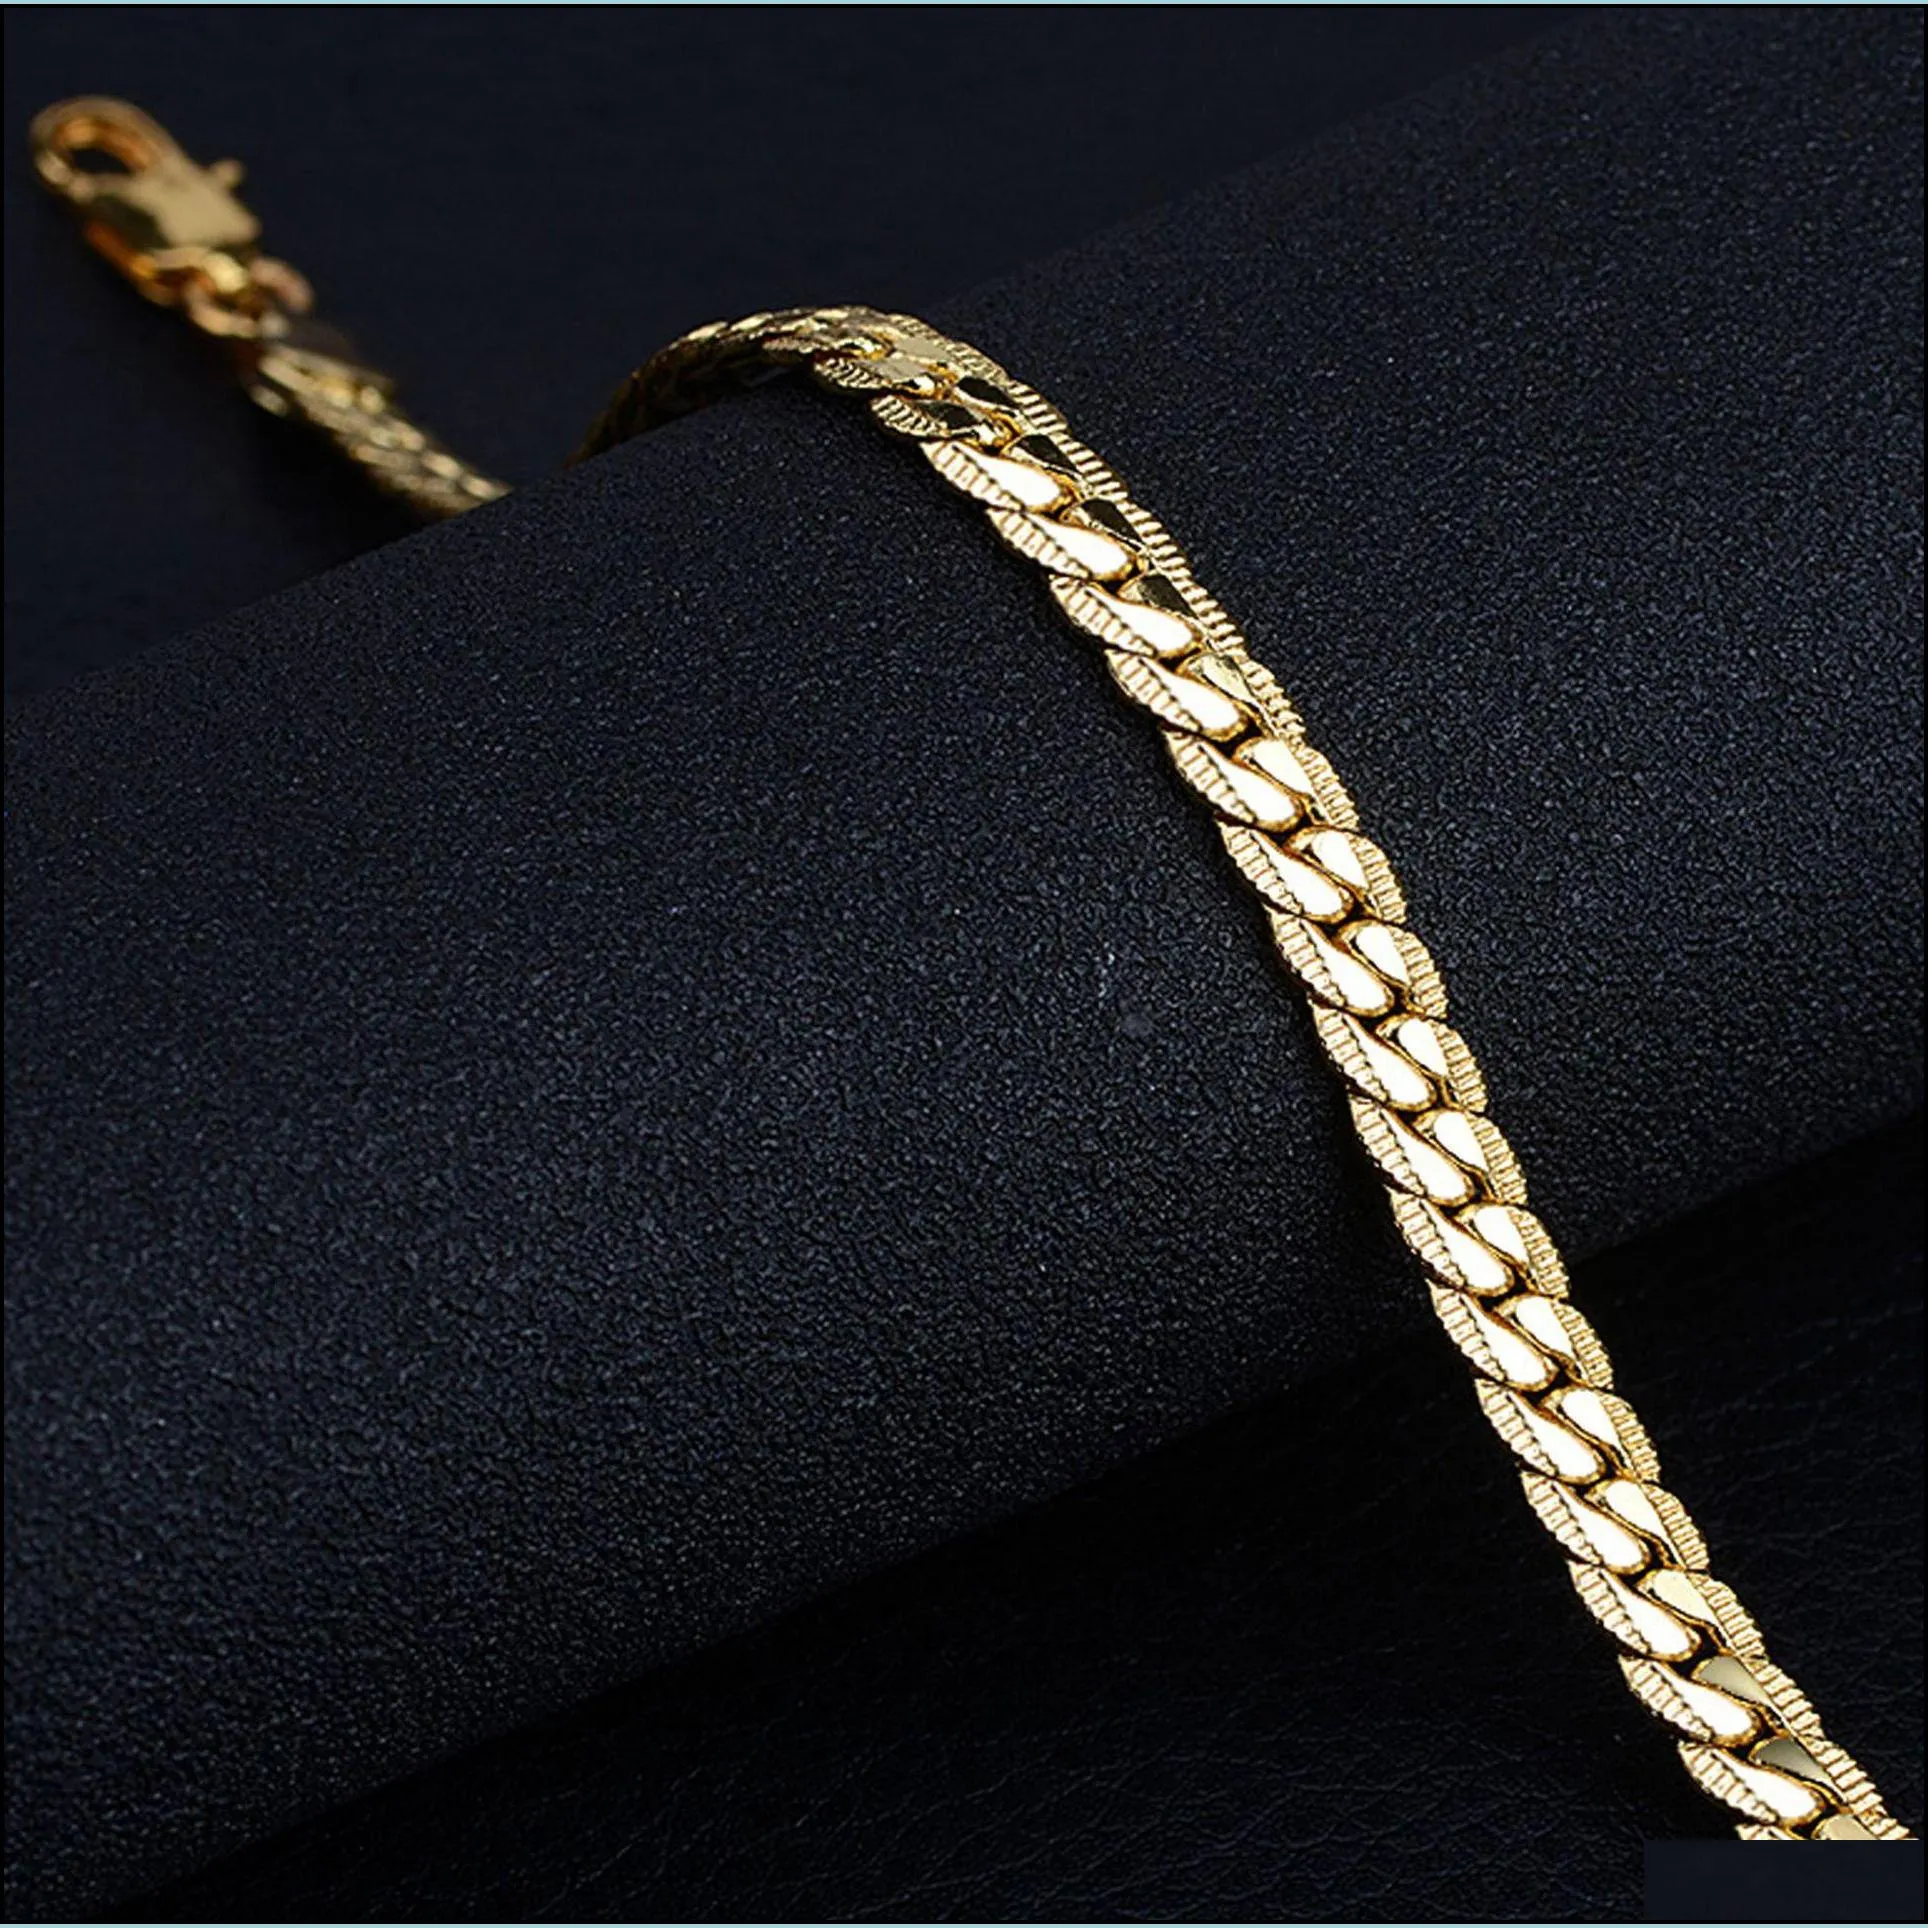 fashion female 18k gold bracelet for women bridal wedding party jewelry birthday gift 5m side 18k gold bracelet